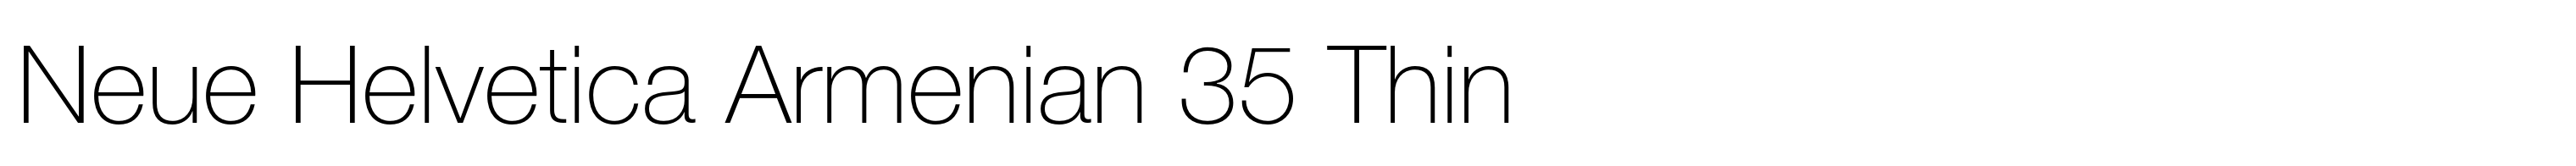 Neue Helvetica Armenian 35 Thin